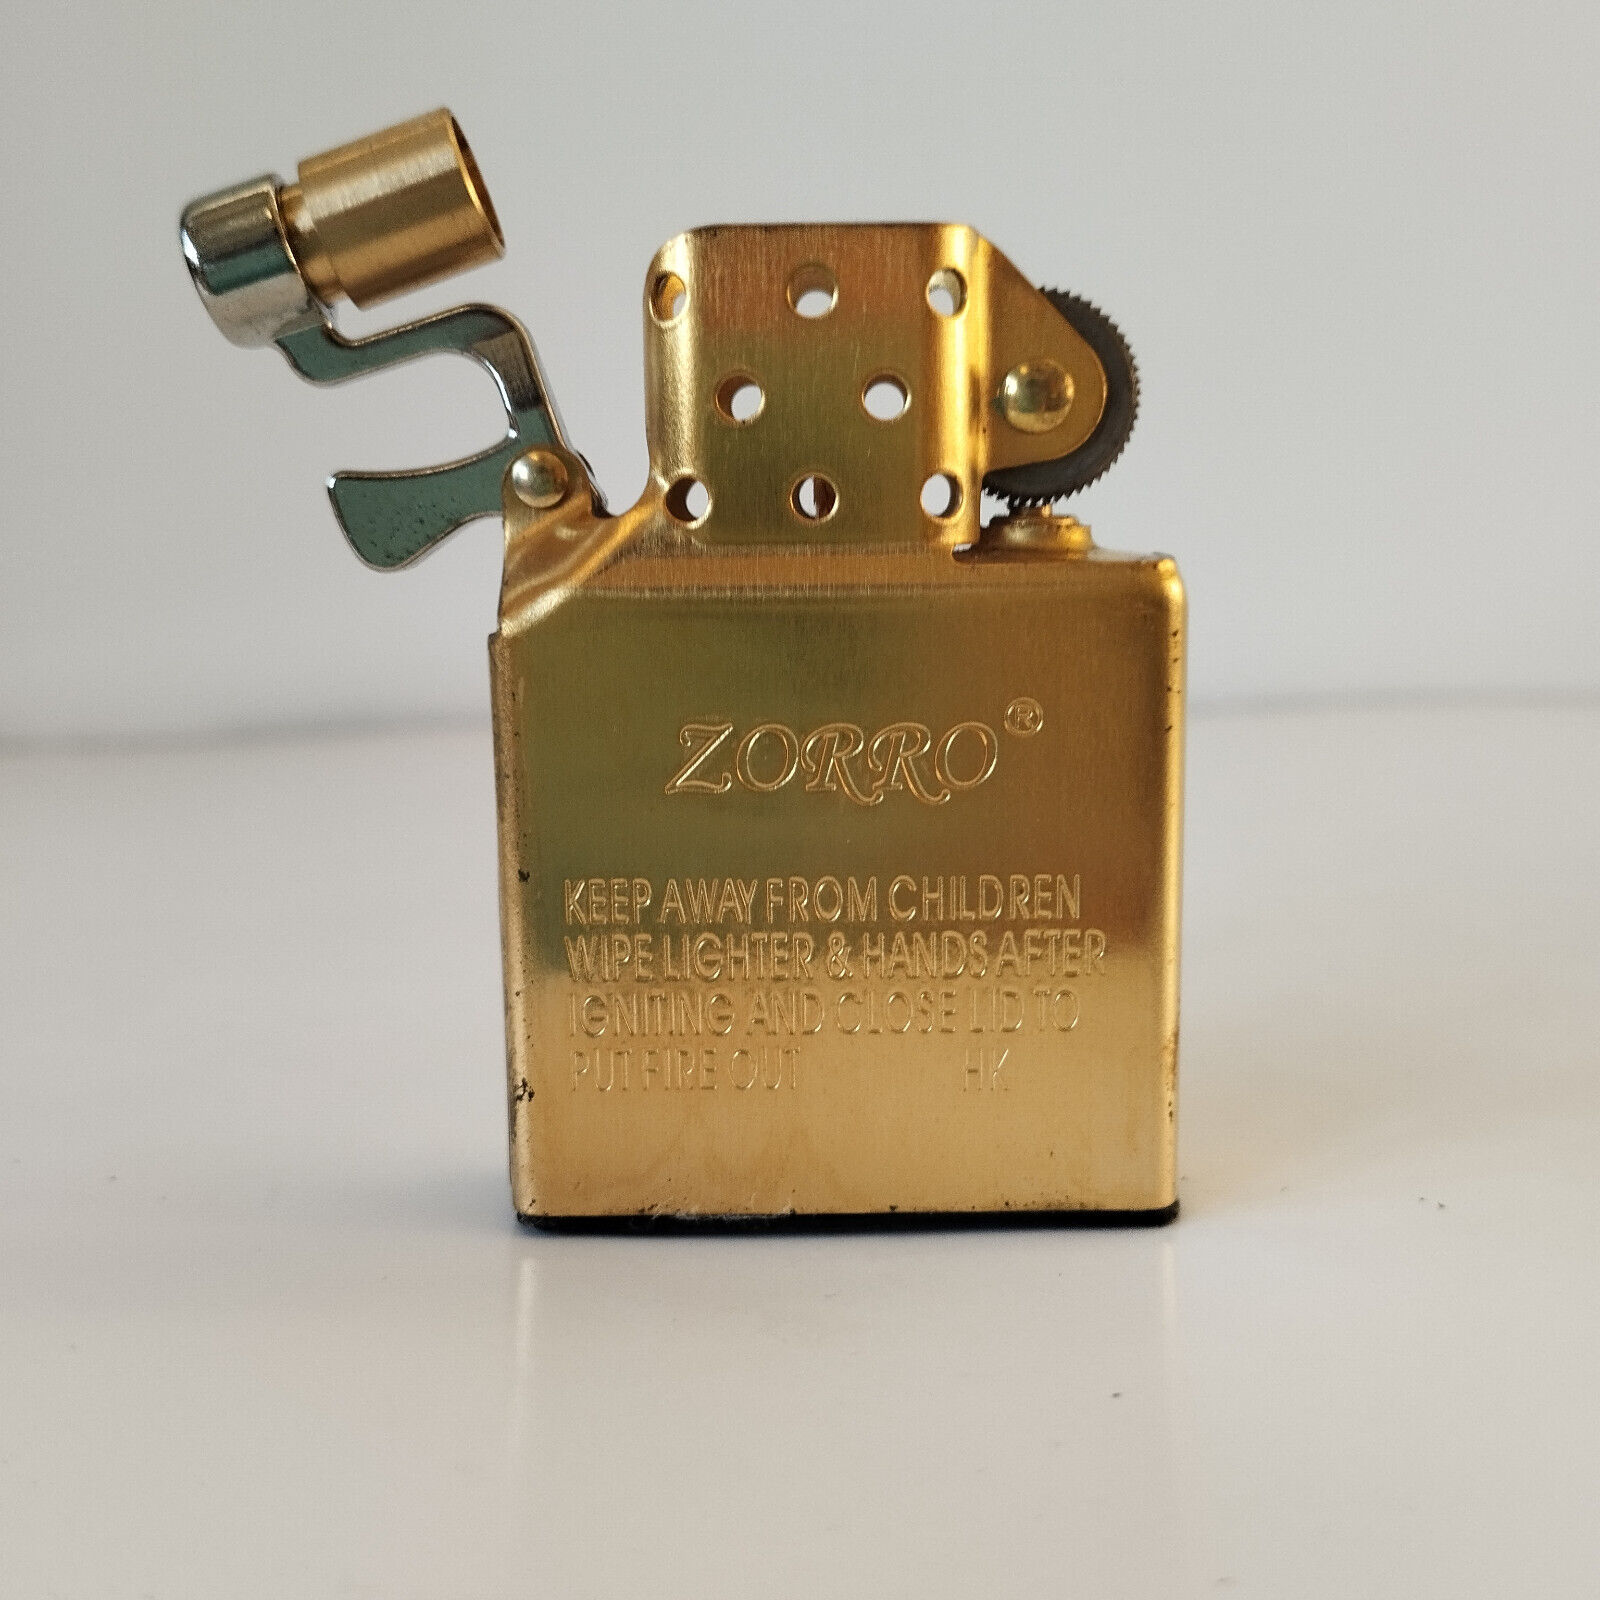 Zorro Brass Lighter Insert with Wick Cover & Bottom Rubber Gasket